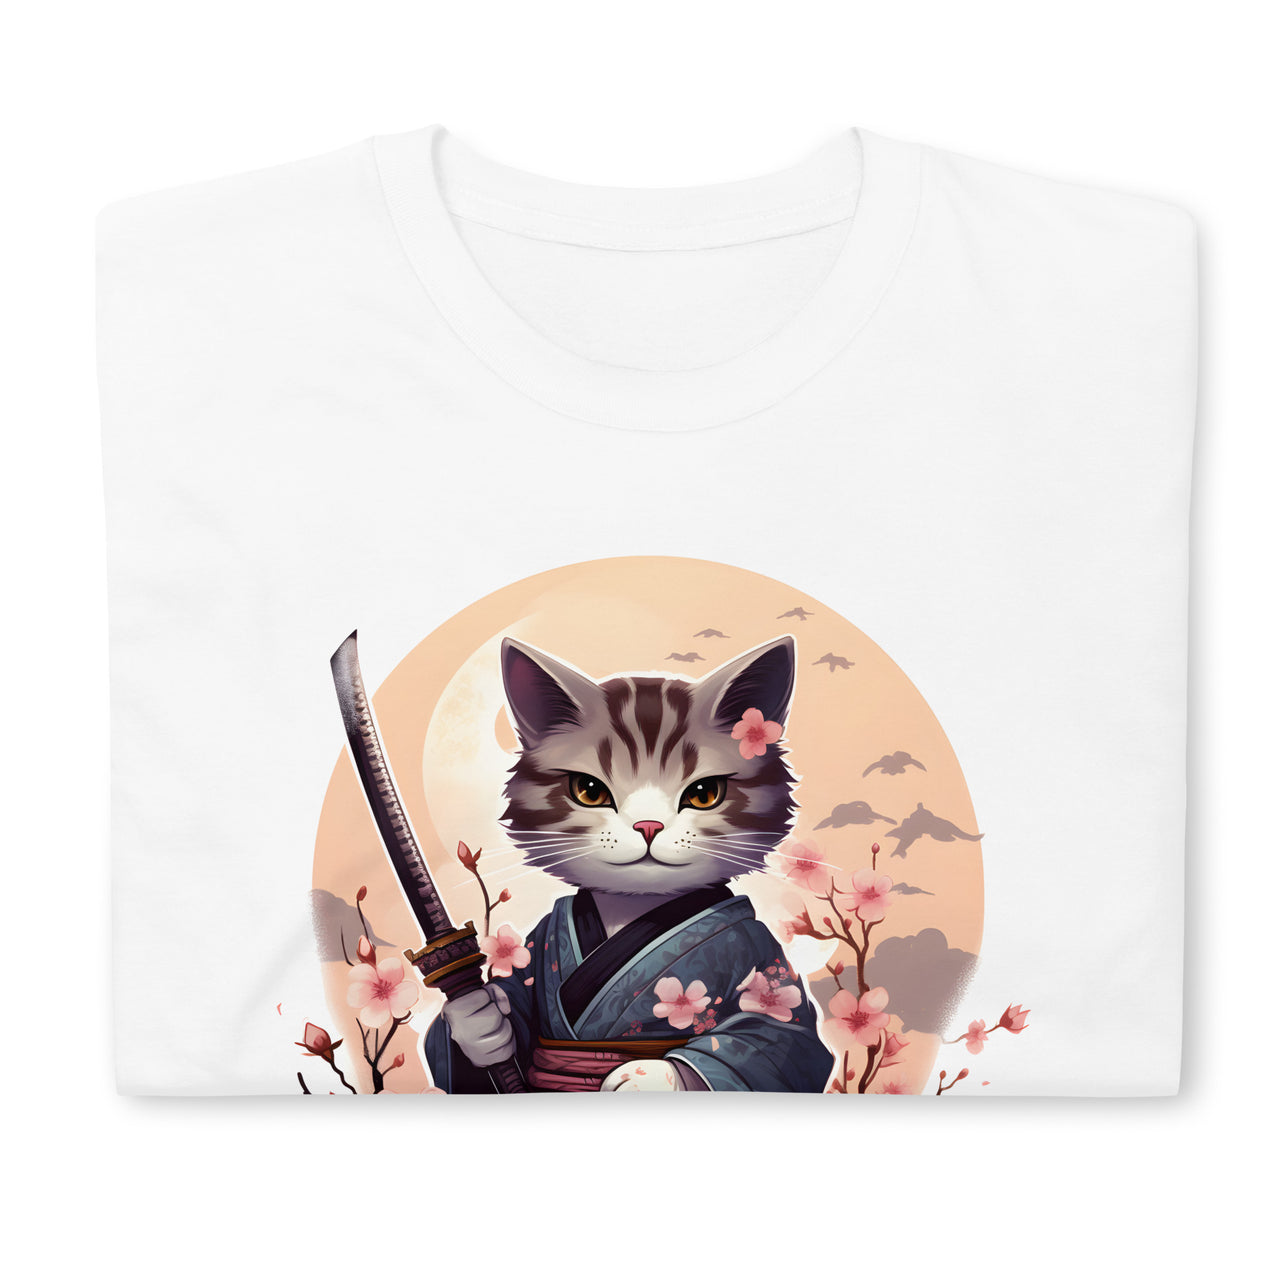 Japanese Anime Samurai Cat in Kimono T-Shirt